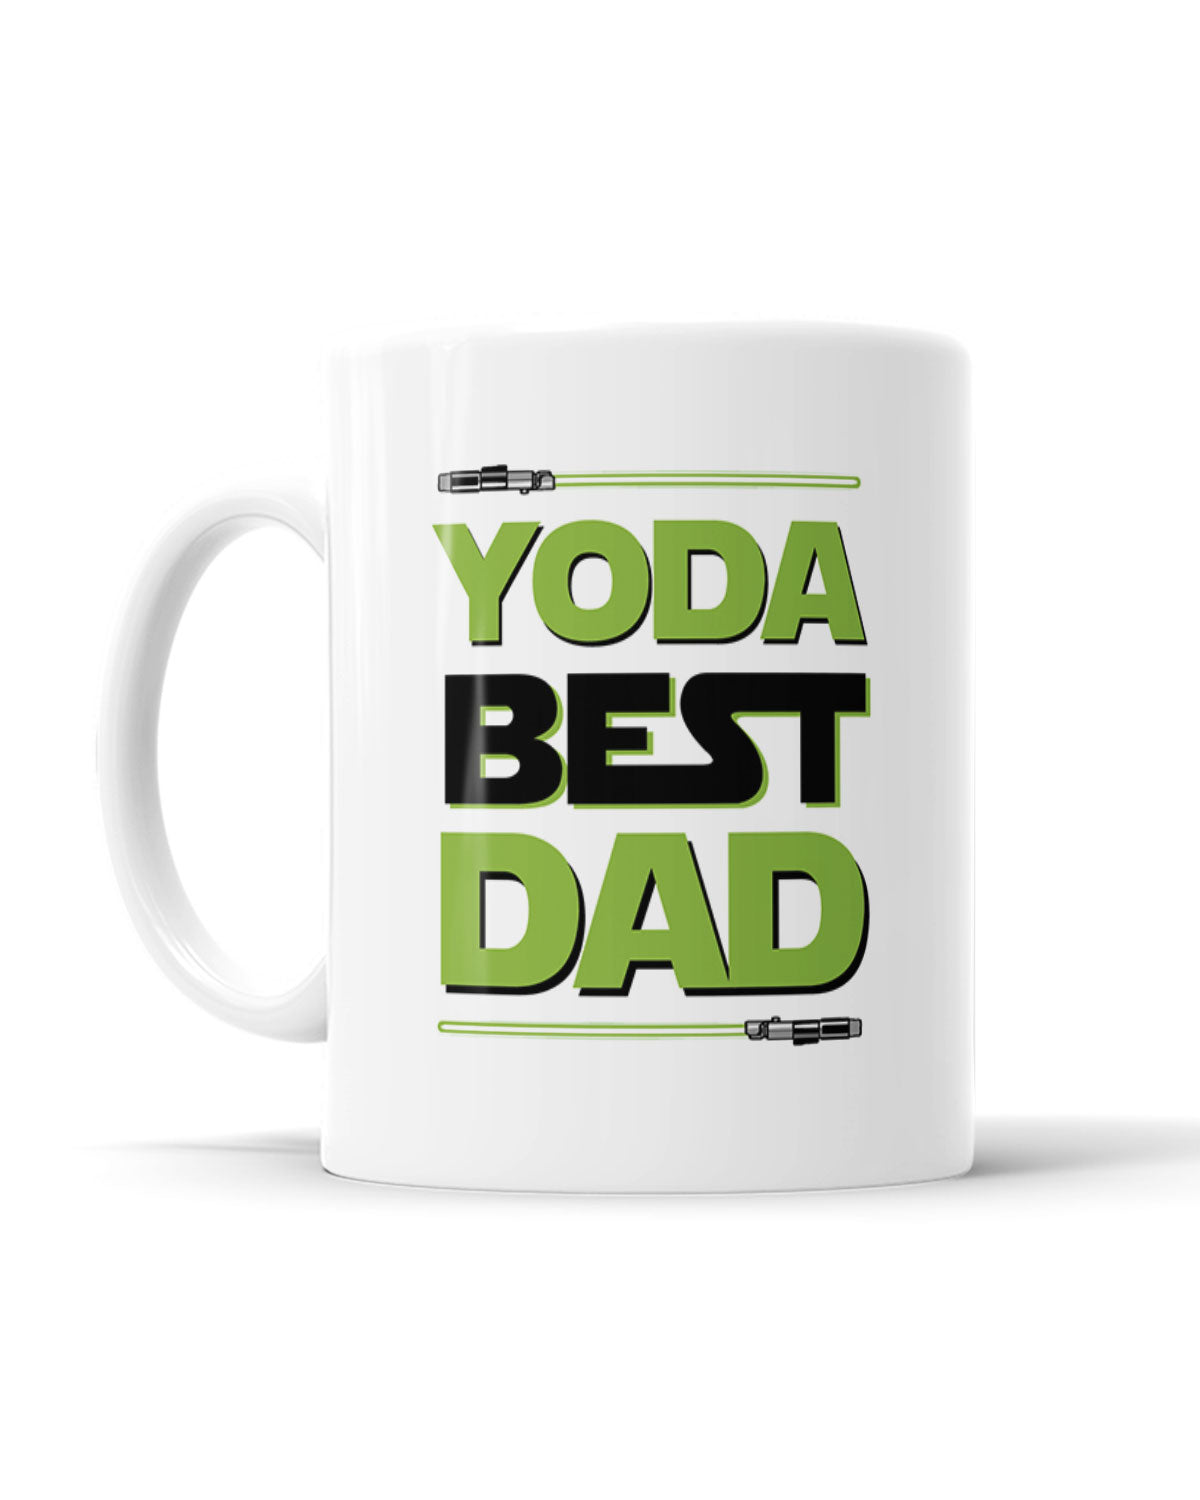 Yoda Best Dad